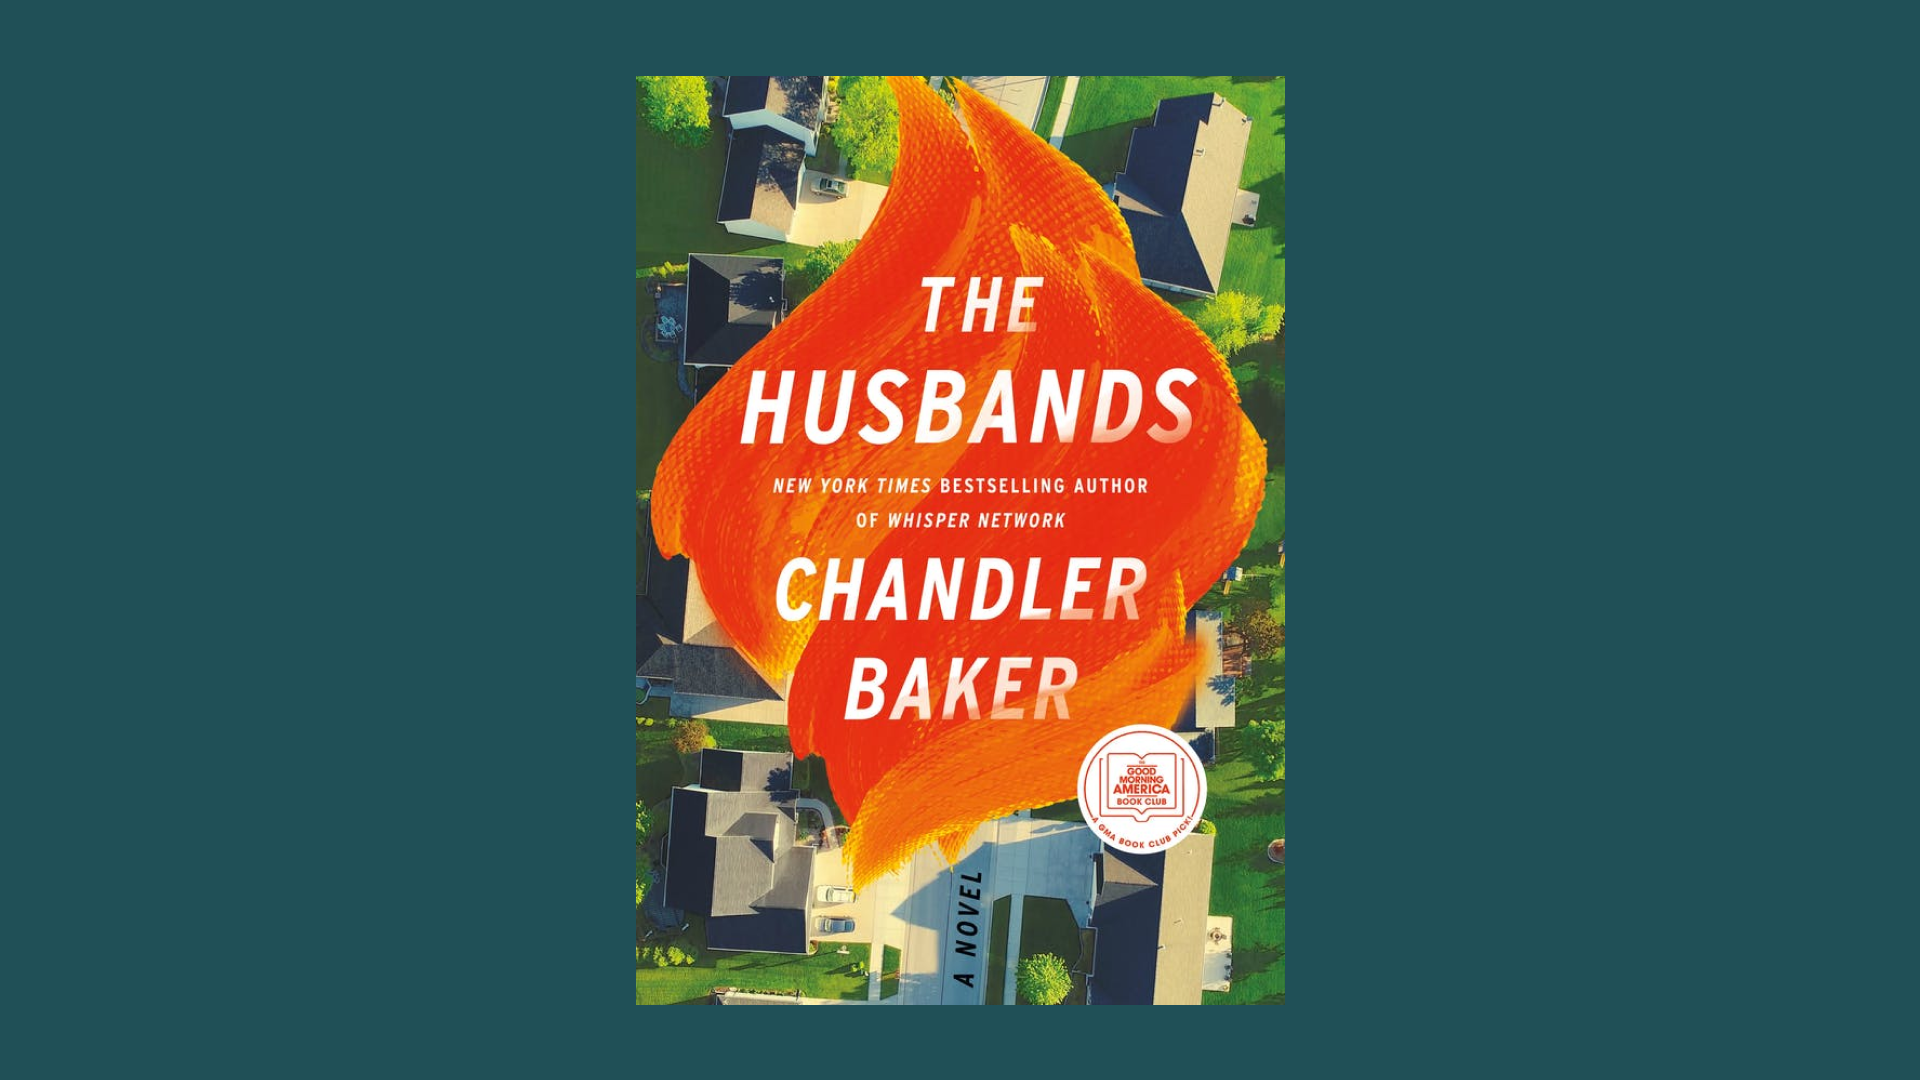 “The Husbands” by Chandler Baker 